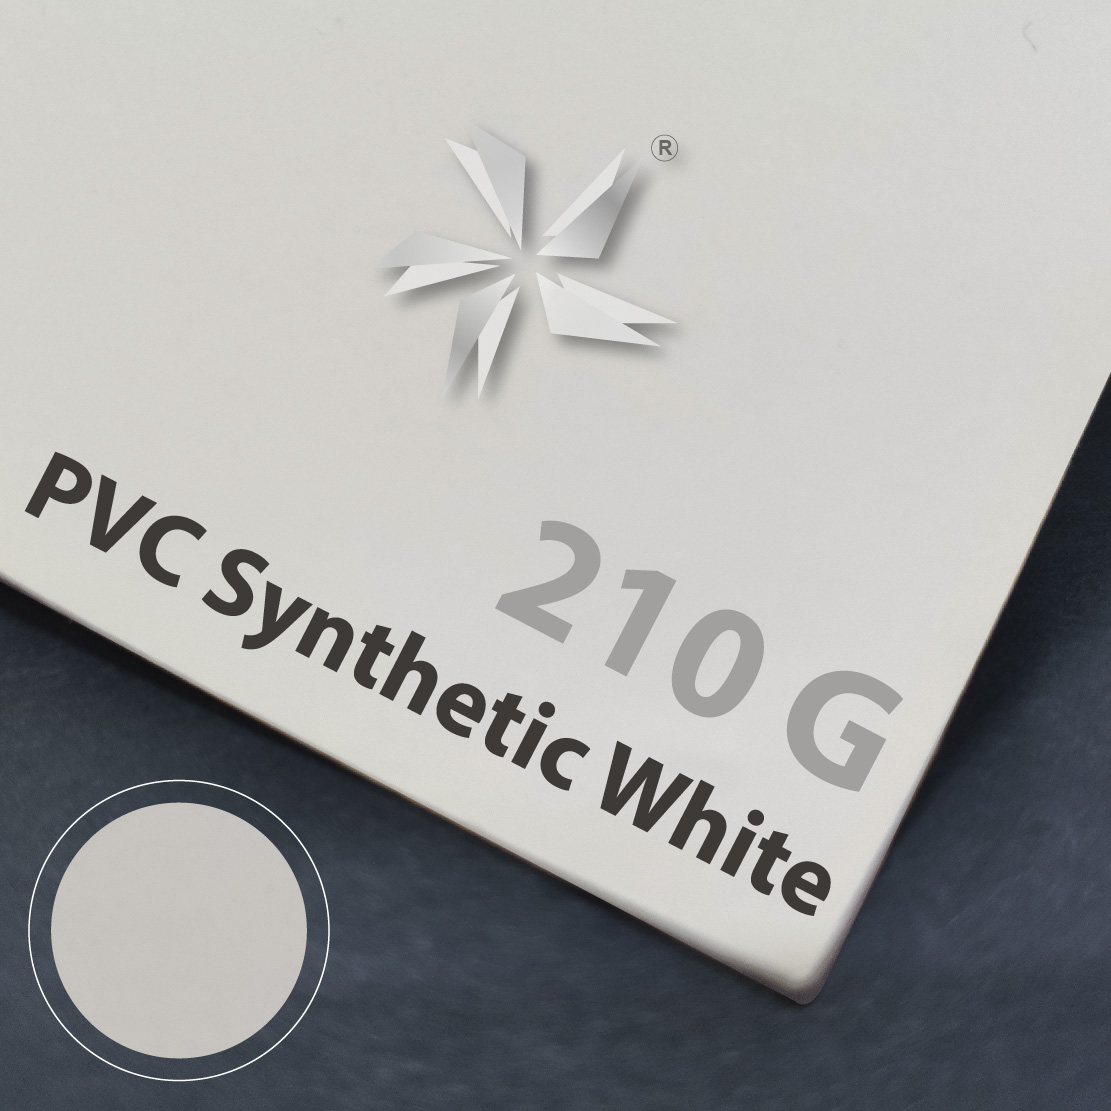 PVC Synthetic White 210 micron (275gsm)